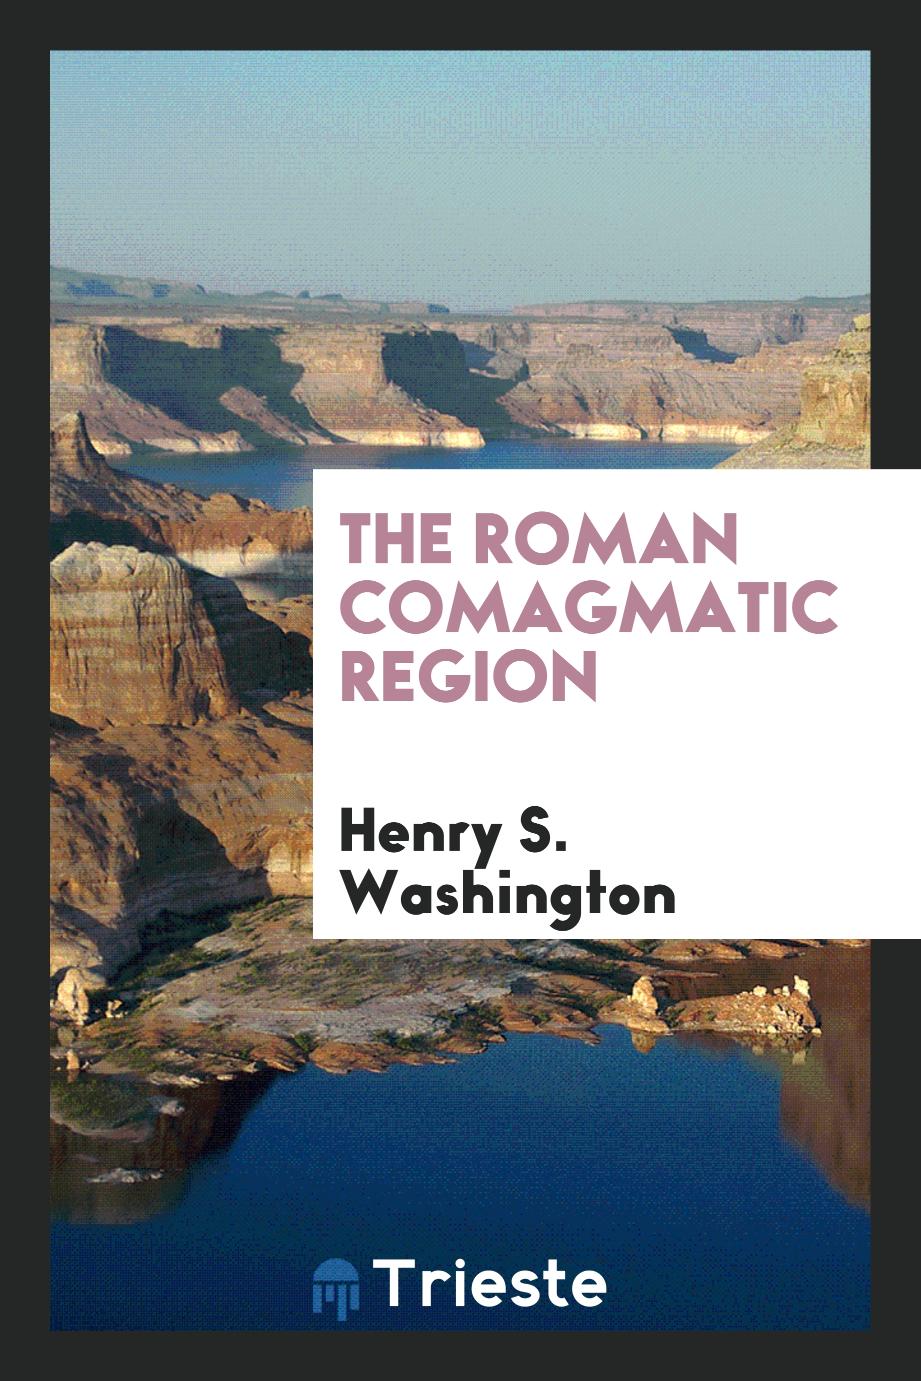 The Roman comagmatic region